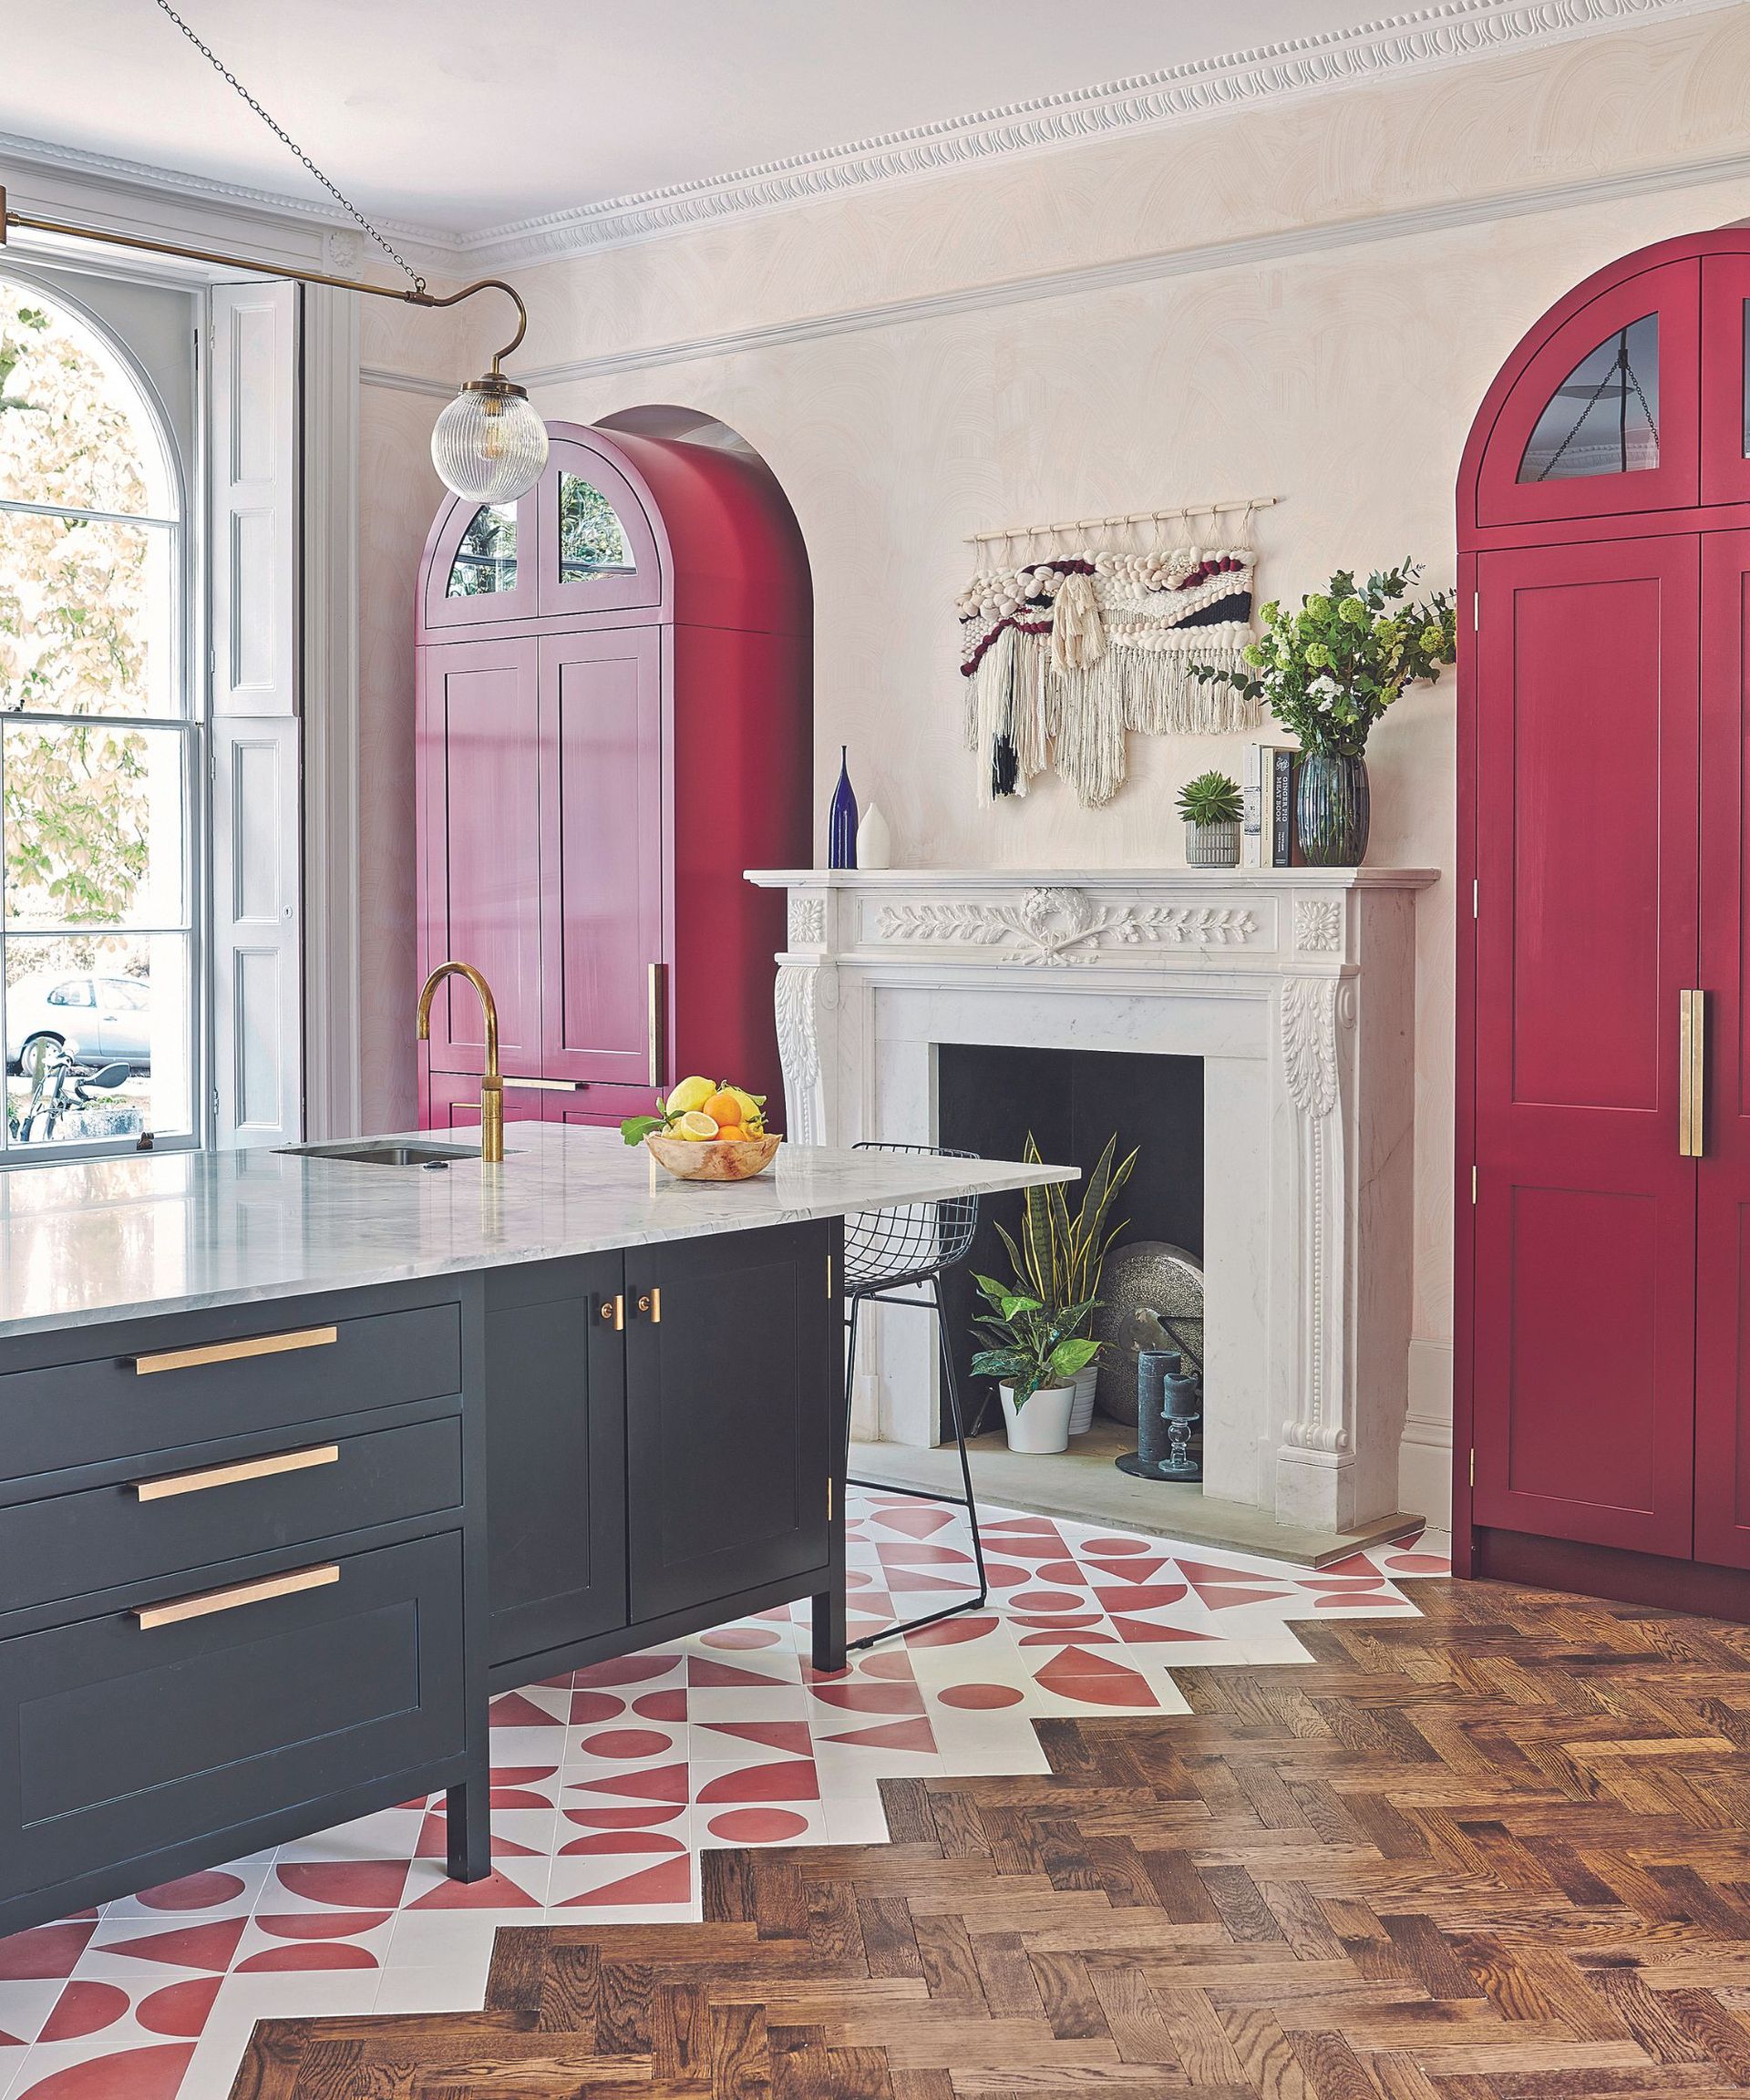 Beautiful kitchen ideas: 13 effortlessly elegant spaces